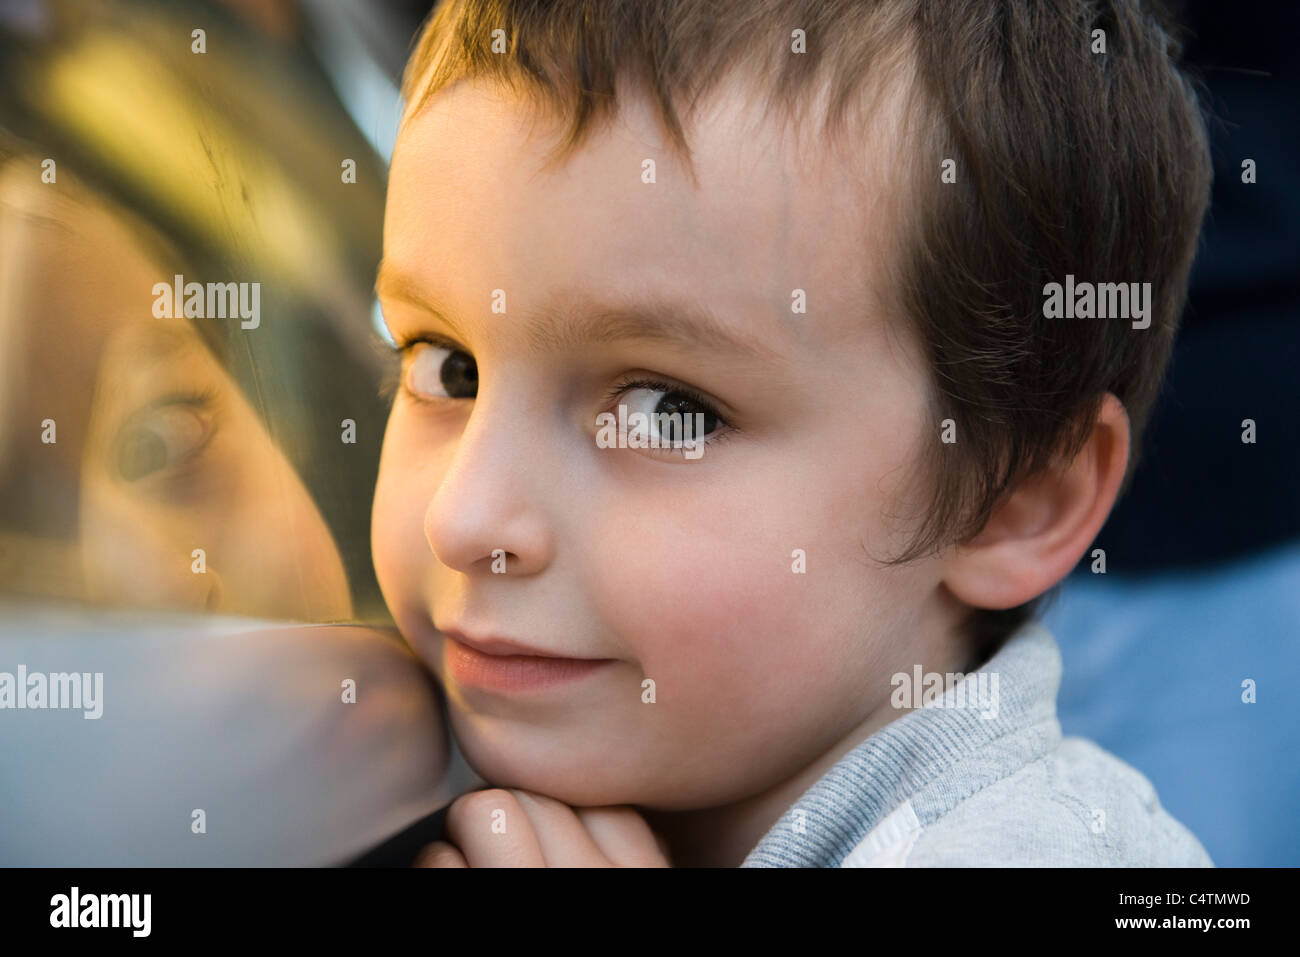 Boy glancing sideways at camera, portrait Stock Photo